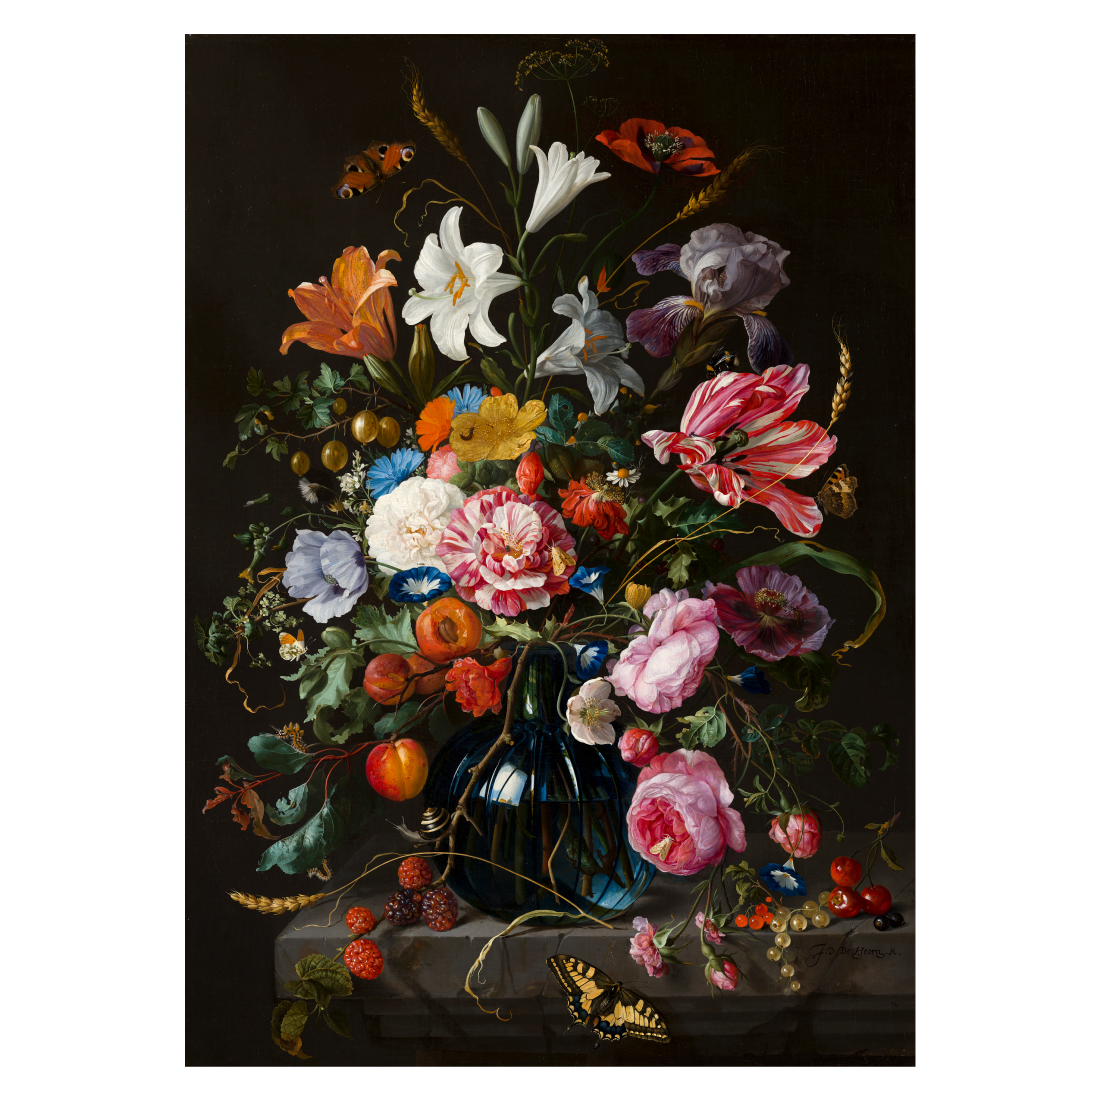 Kunstplakat med Jan Davidsz de Heem "Vase of Flowers"